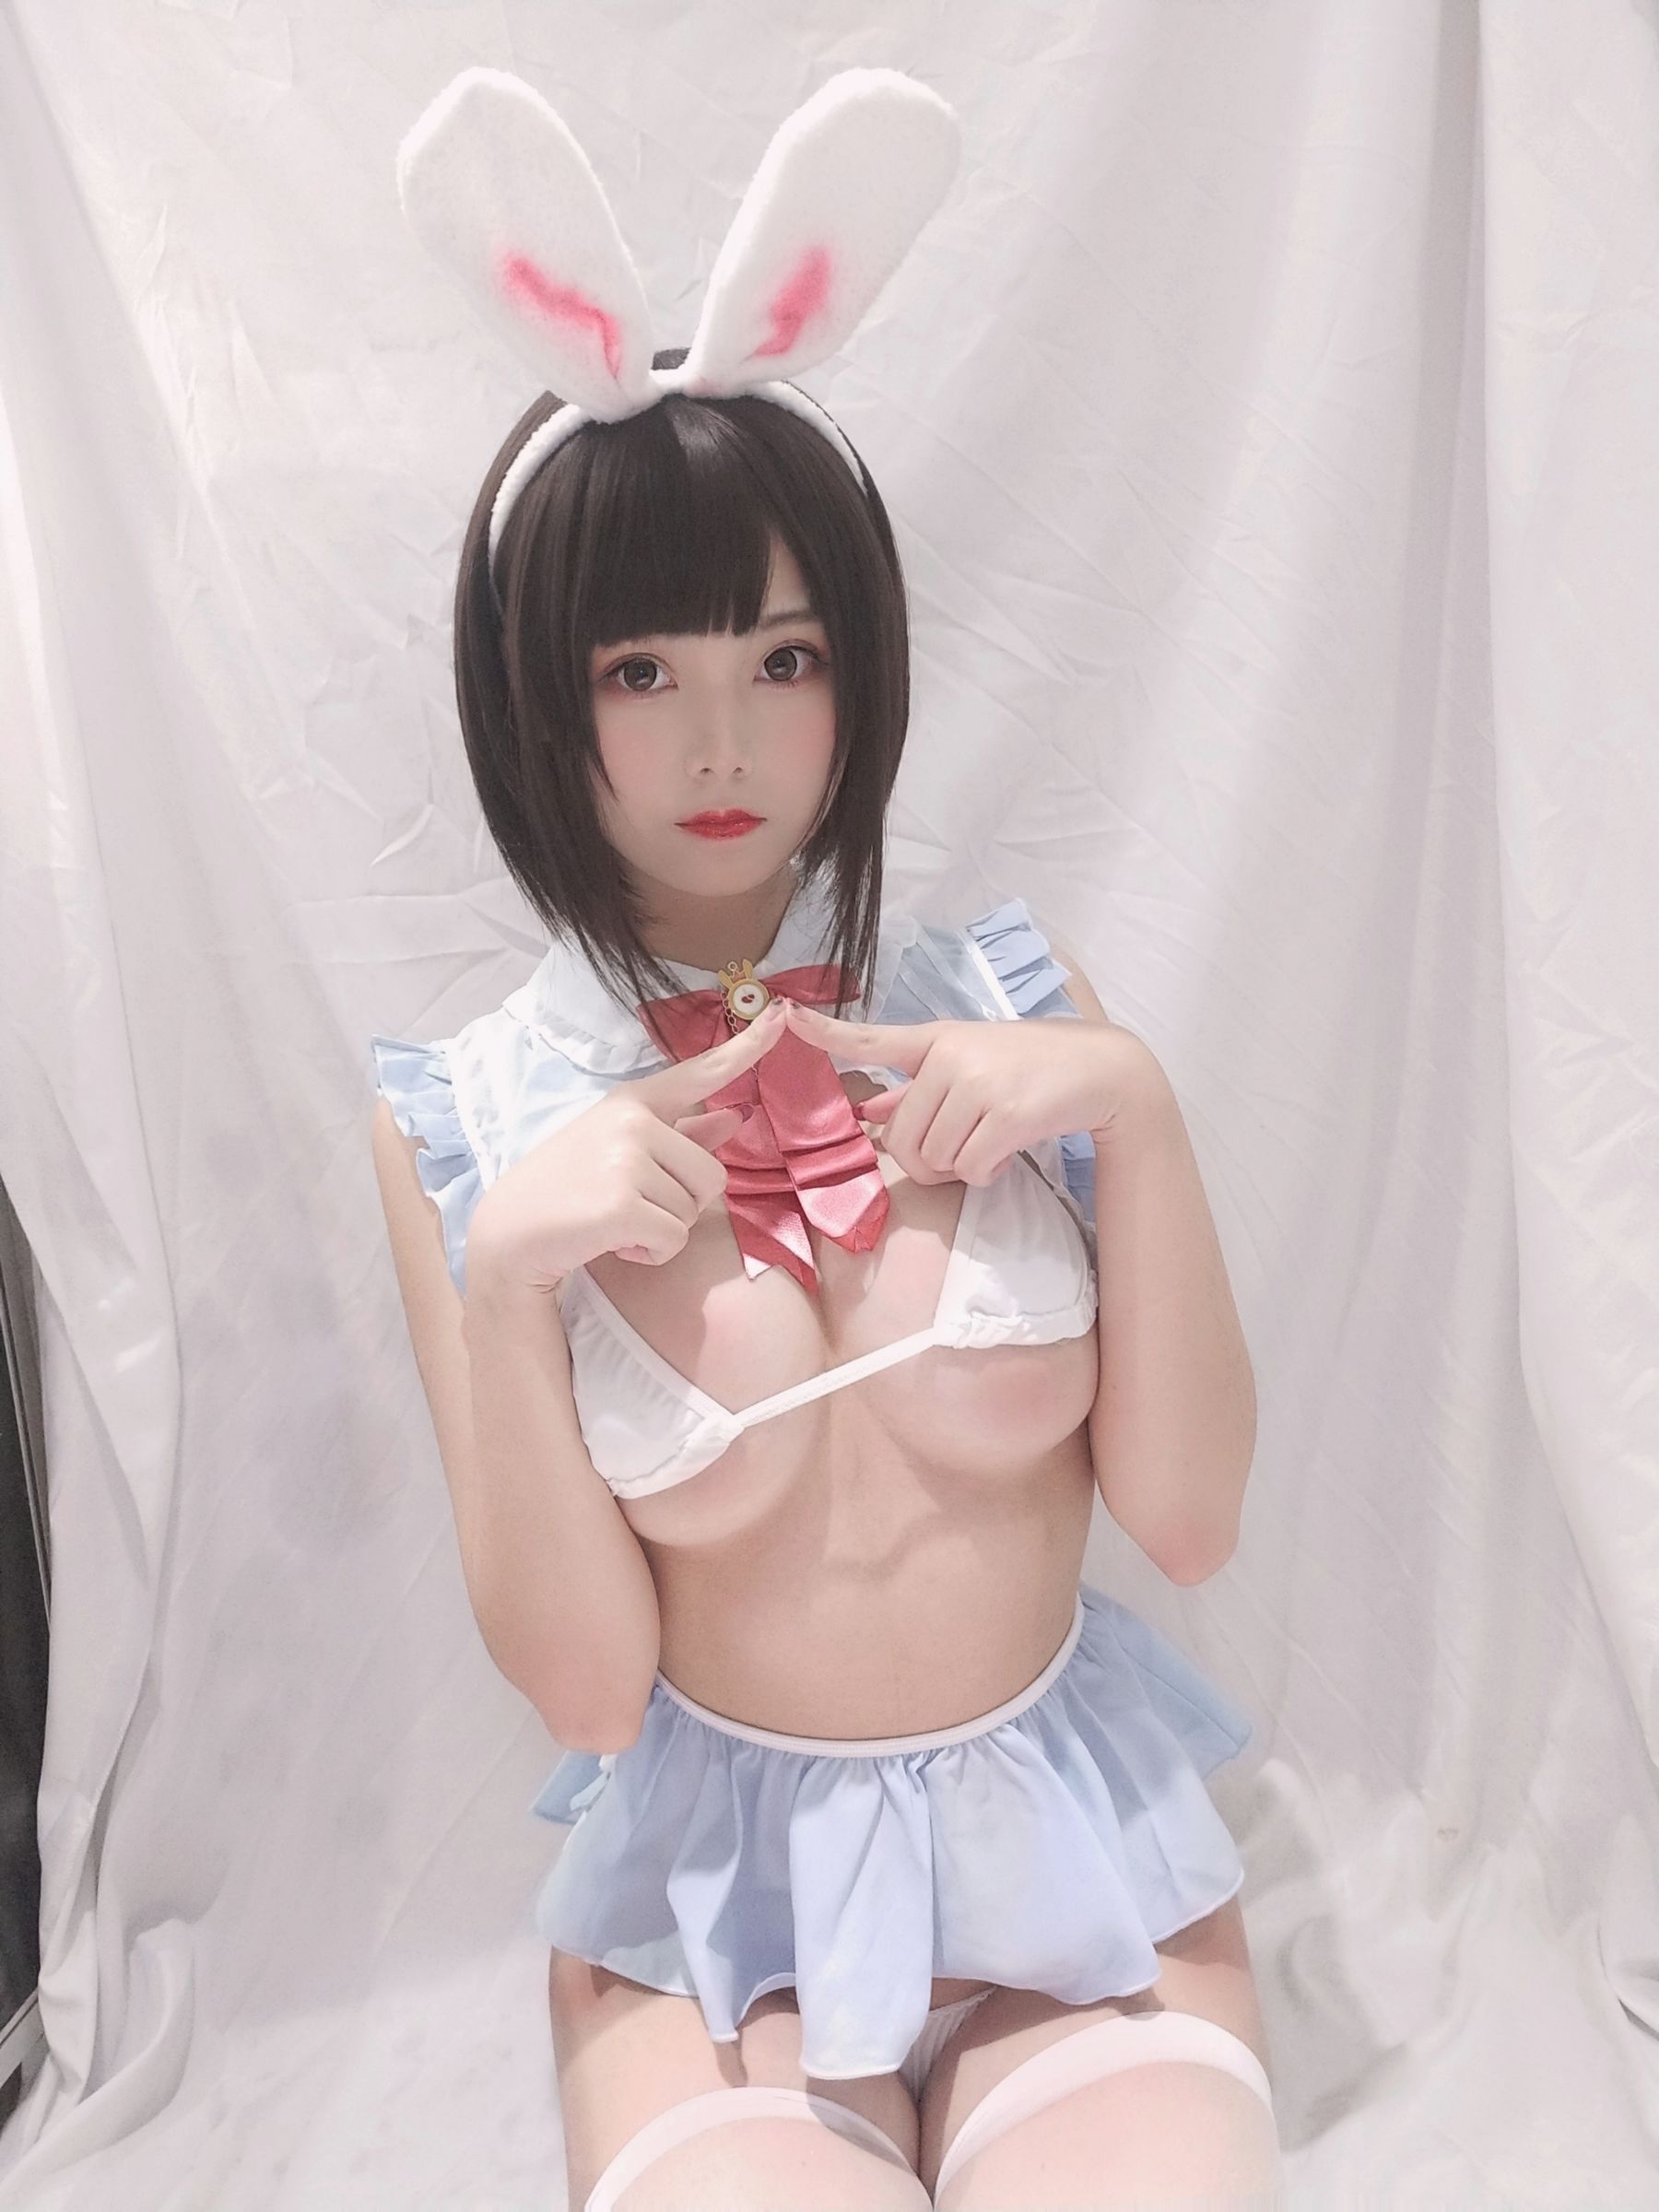 [Cosplay写真] 萌系小姐姐蜜汁猫裘 - 小白兔自拍